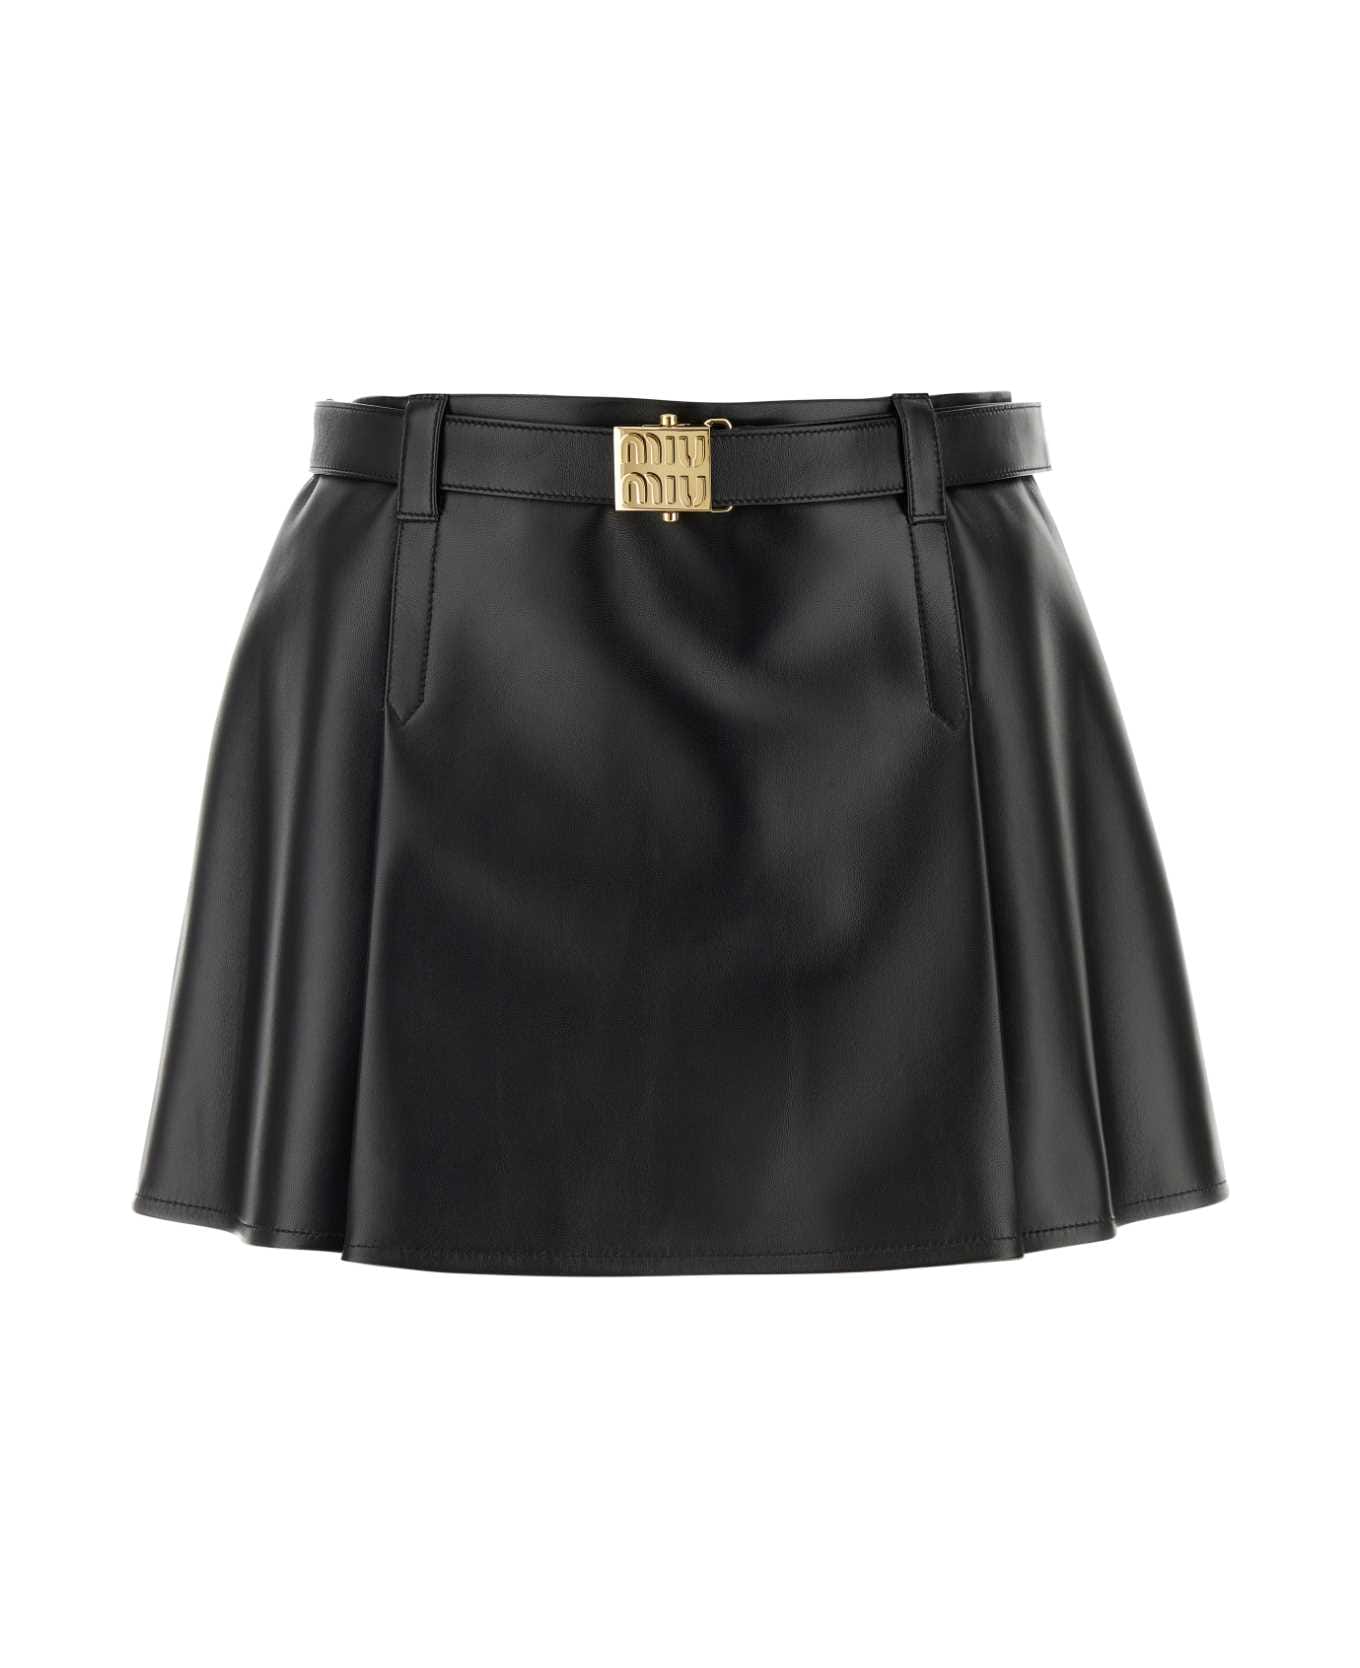 Miu Miu Black Nappa Leather Mini Skirt - NERO